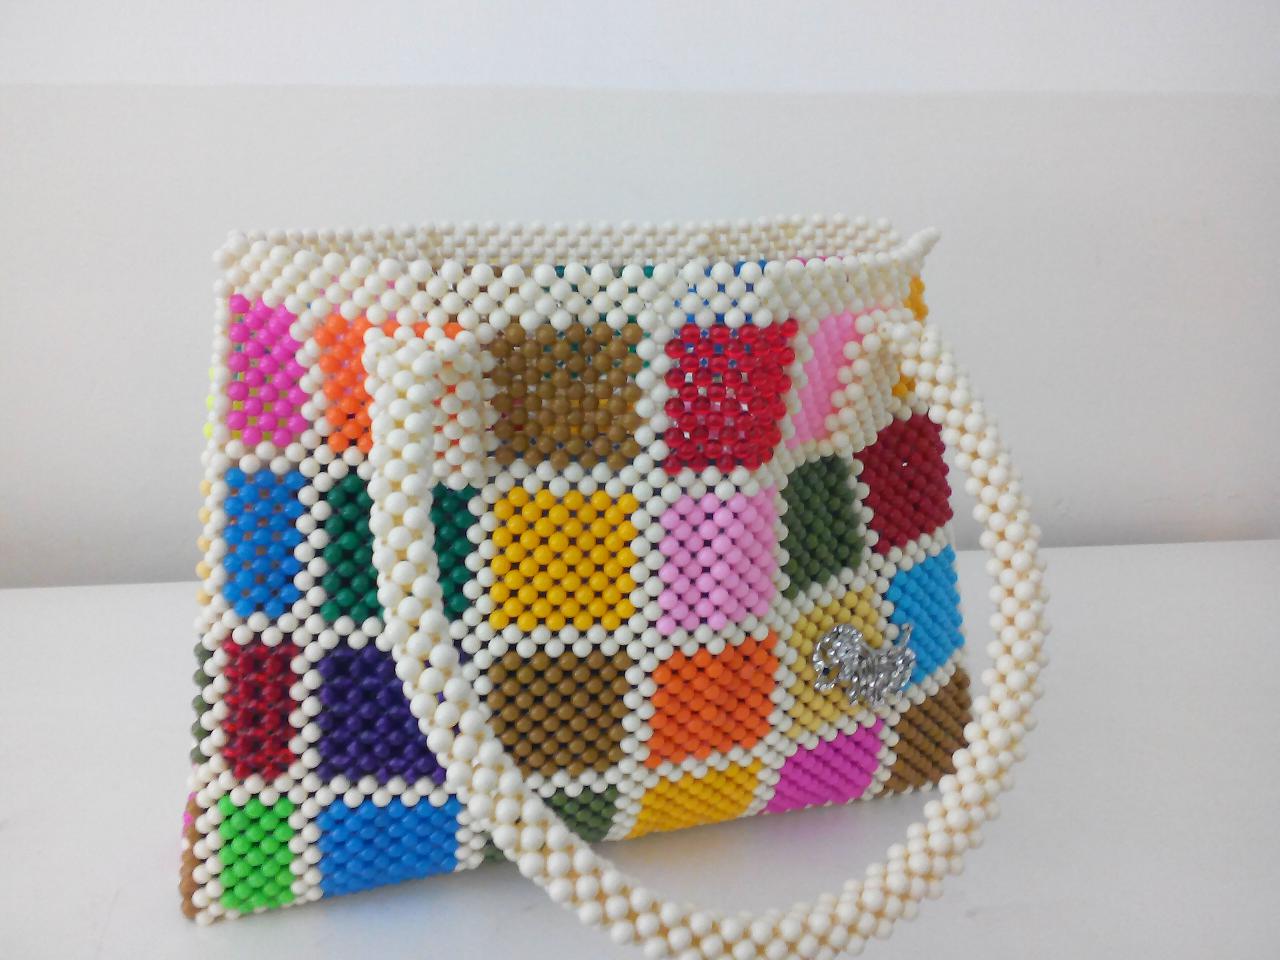 Ohemaa - the beads handbag